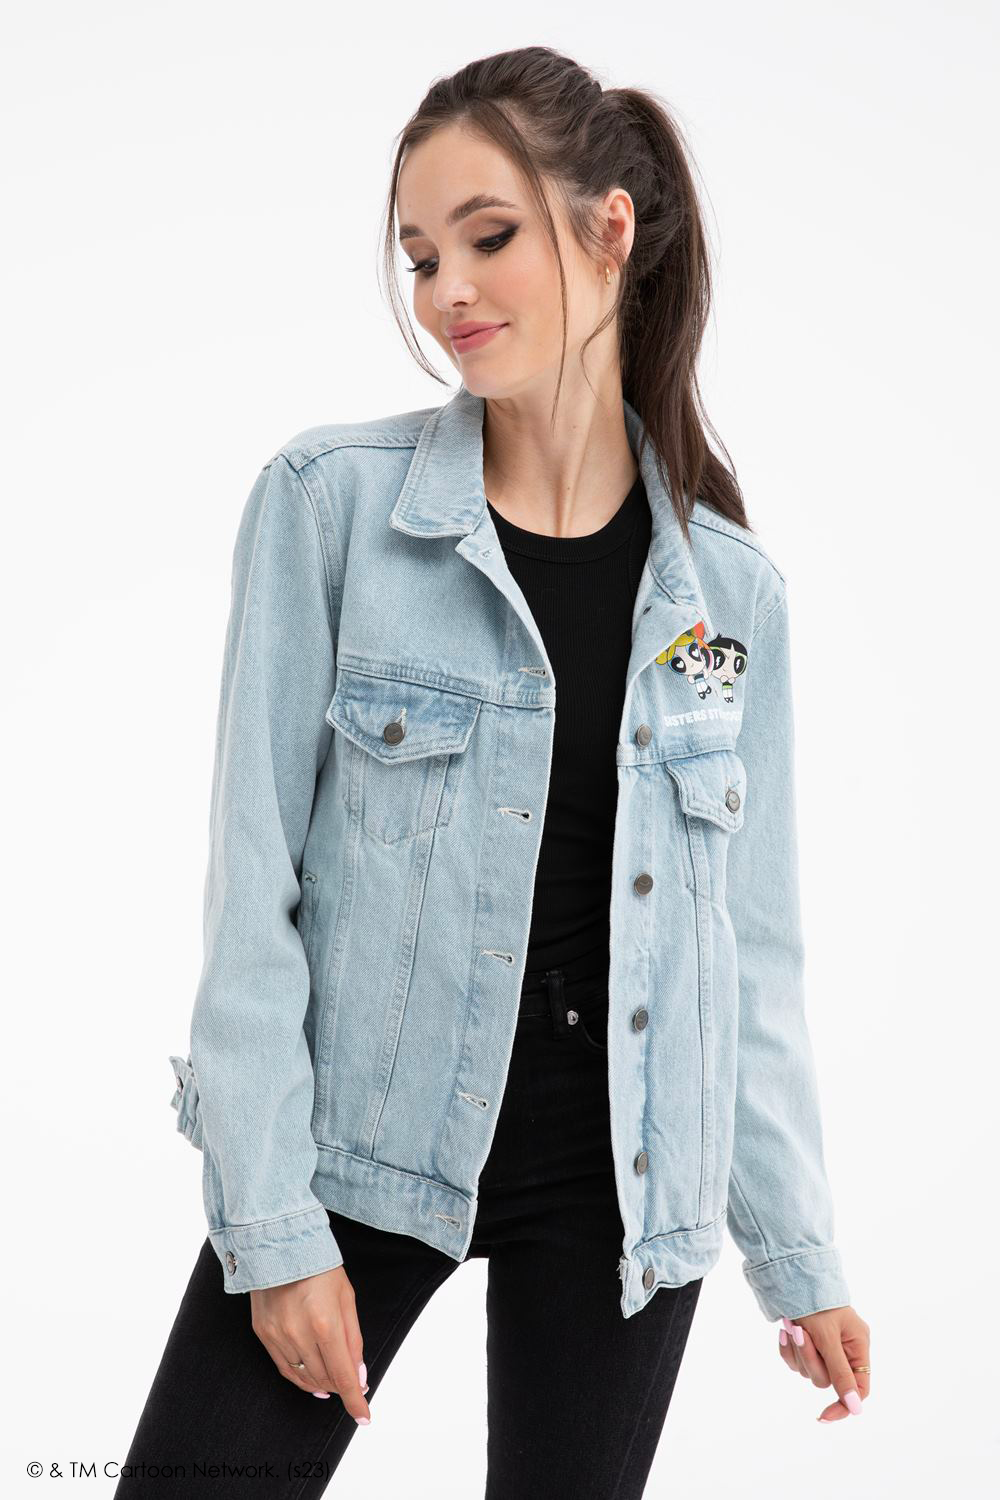 Powerpuff Girls Jeans Jacket